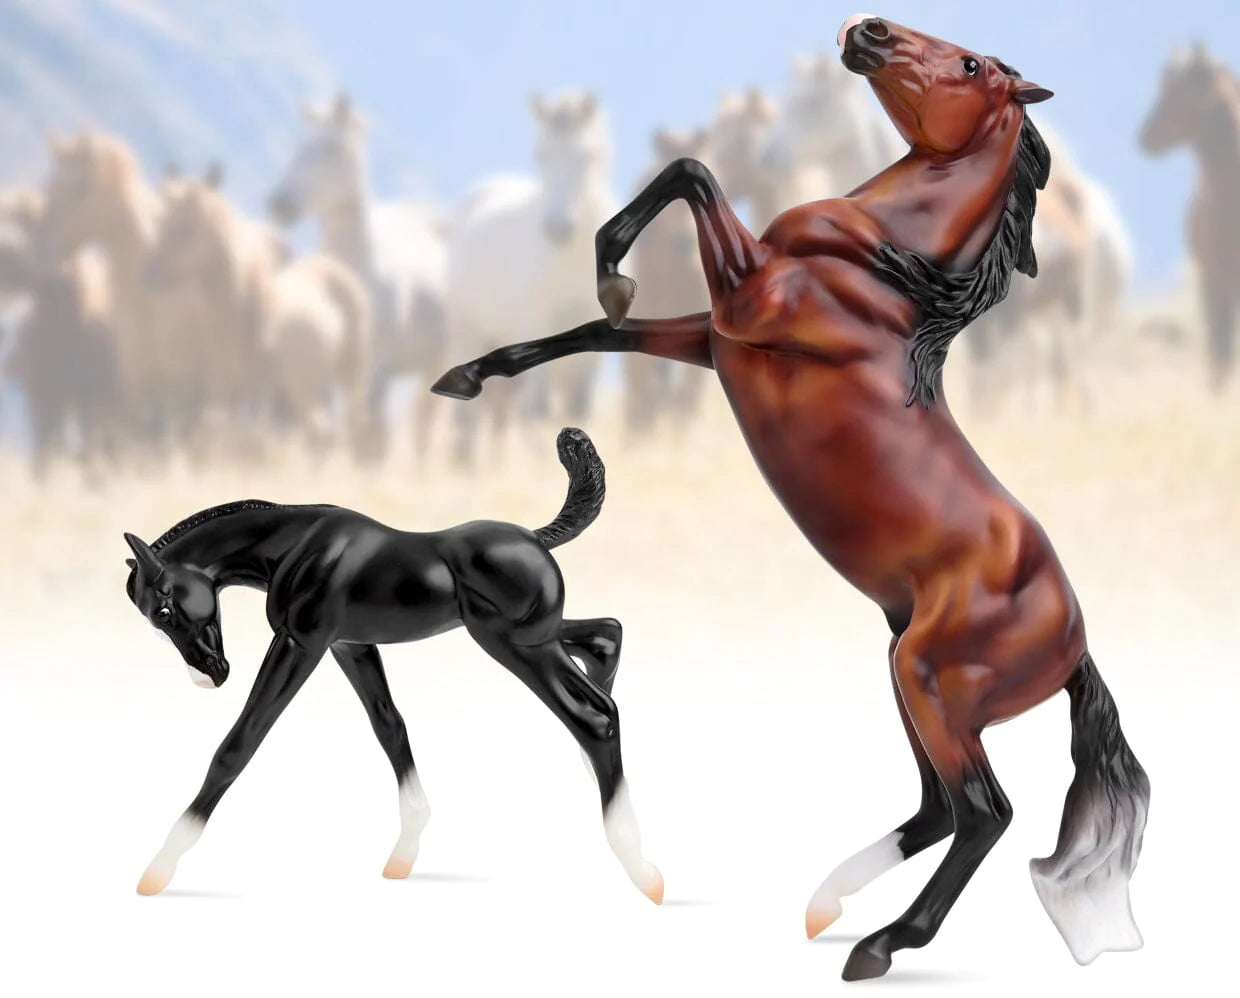 Breyer Wild & Free Horse & Foal Set